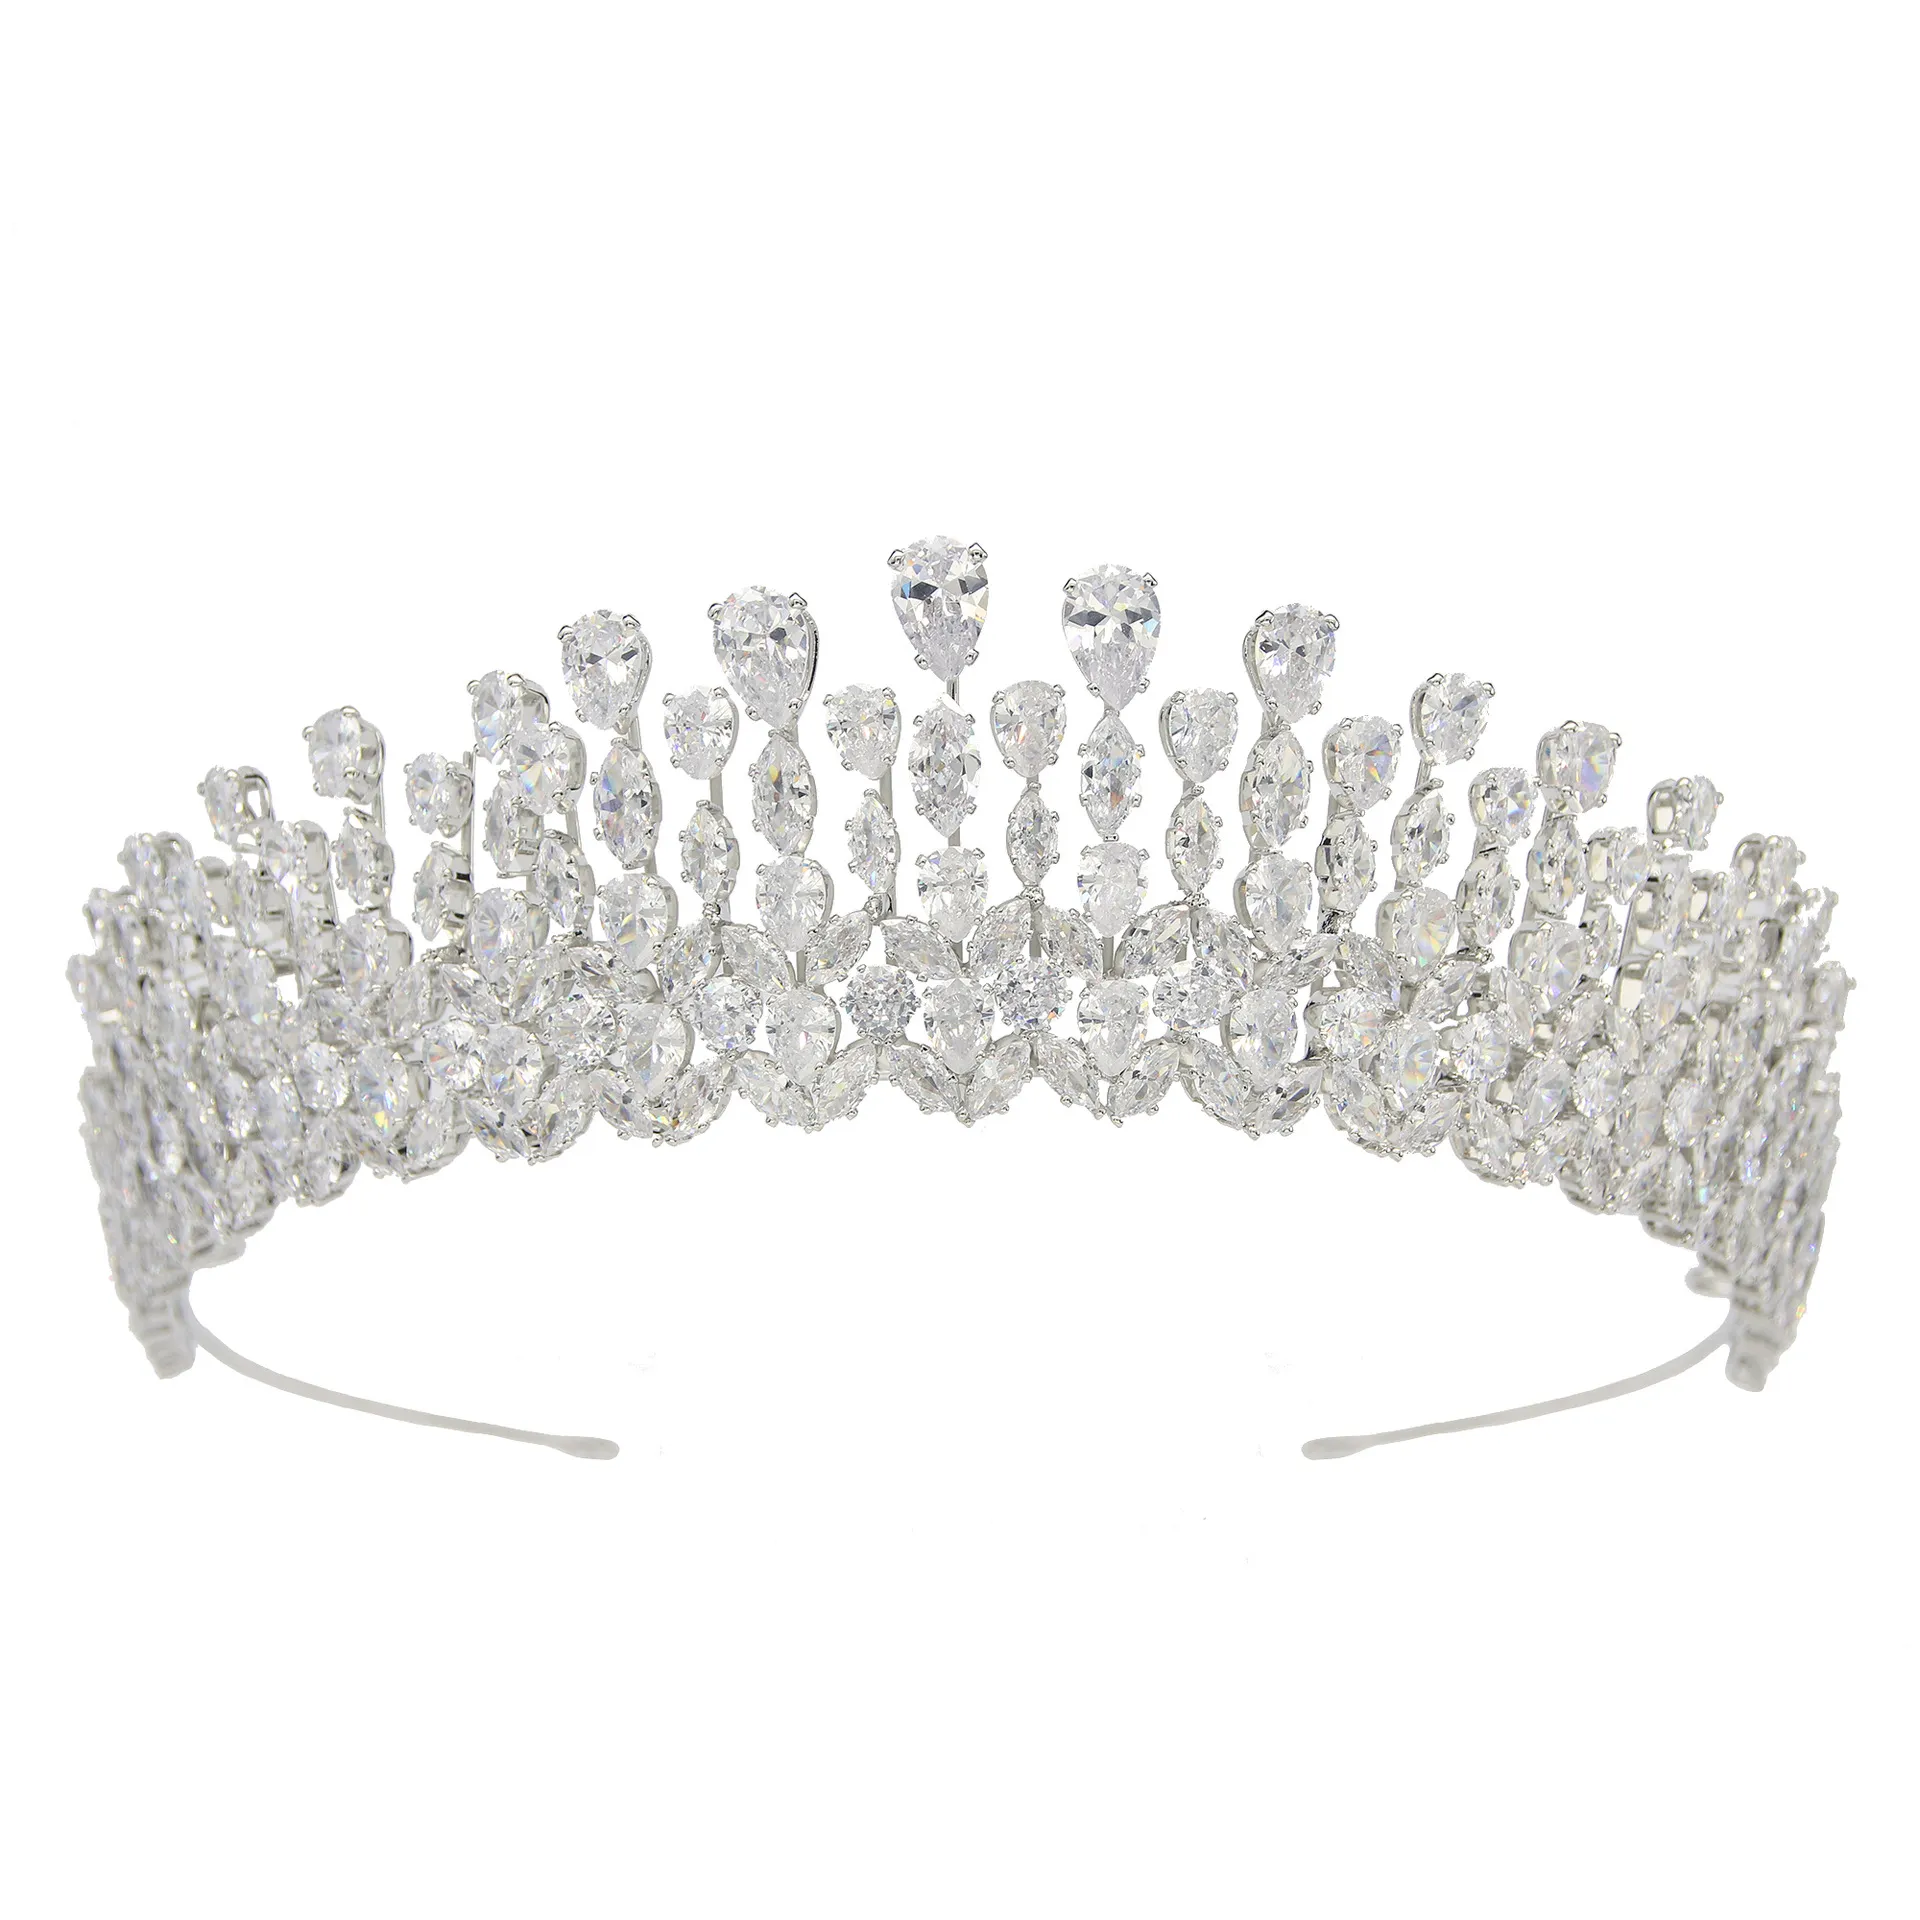 Luxury Bride Headpieces Tiara Crystal Headdress Wedding Hair Accessories Full Zircon Crowns Headband Wedding Jewelry Crowns Headdress For Women CL2105